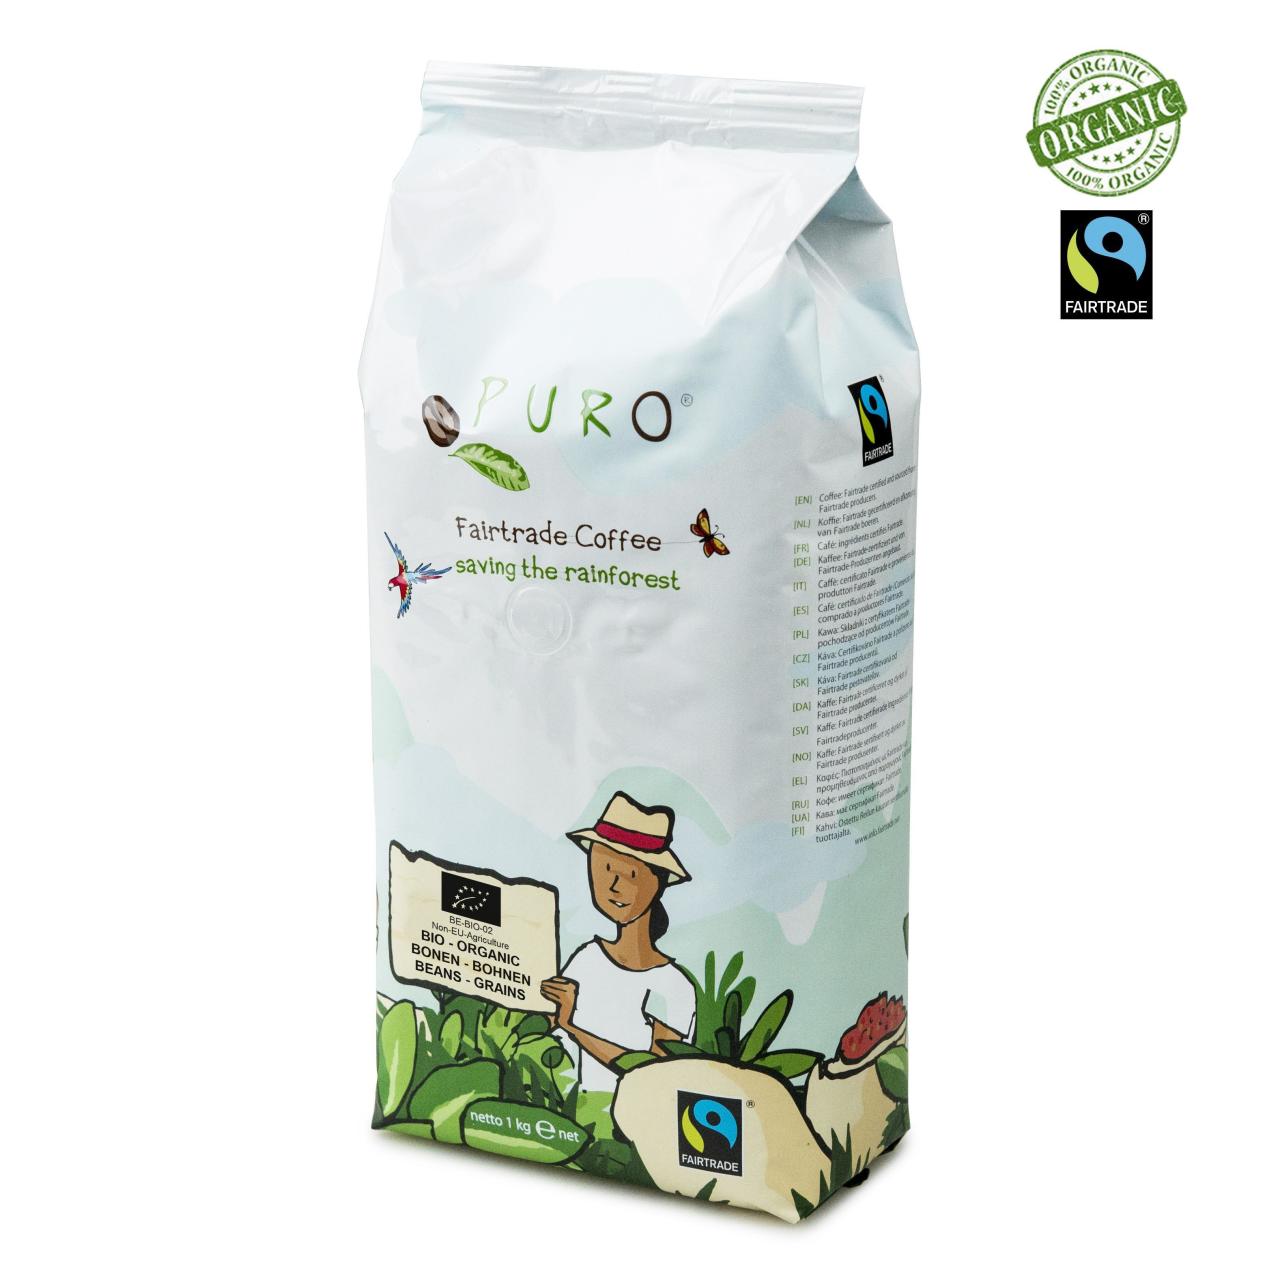 Puro Fairtrade Beans Bio Organik Çekirdek Kahve (9 X 1Kg) 9Kg